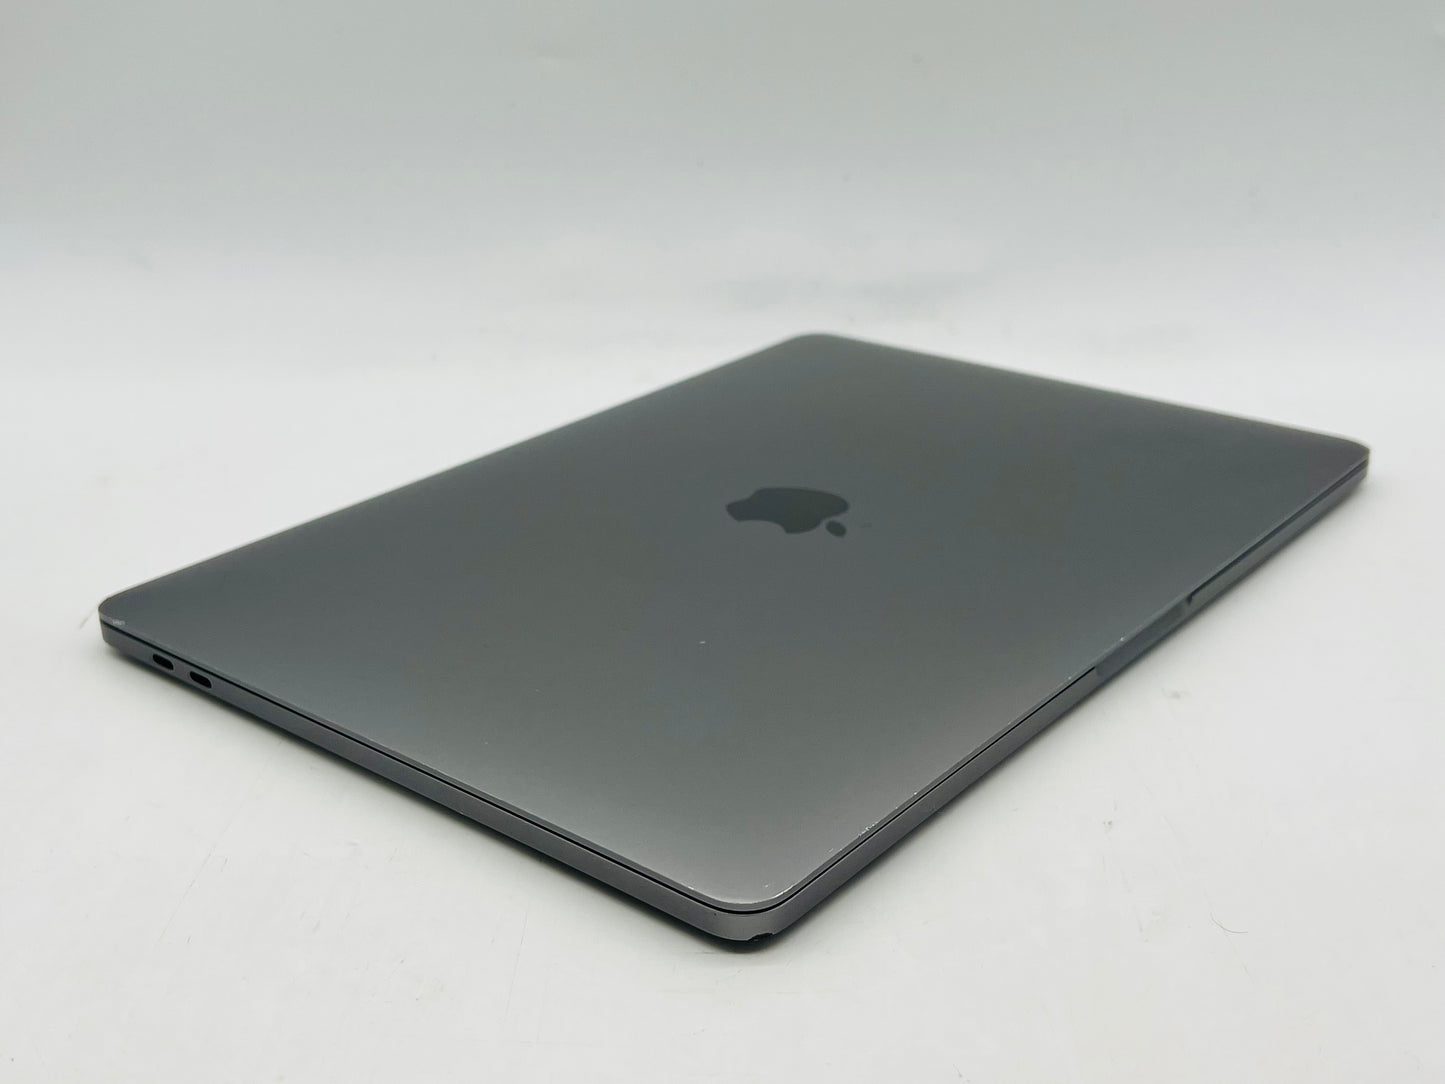 Apple 2019 MacBook Pro 13 in TB 1.4GHz Quad-Core i5 8GB RAM 128GB SSD IIPG645